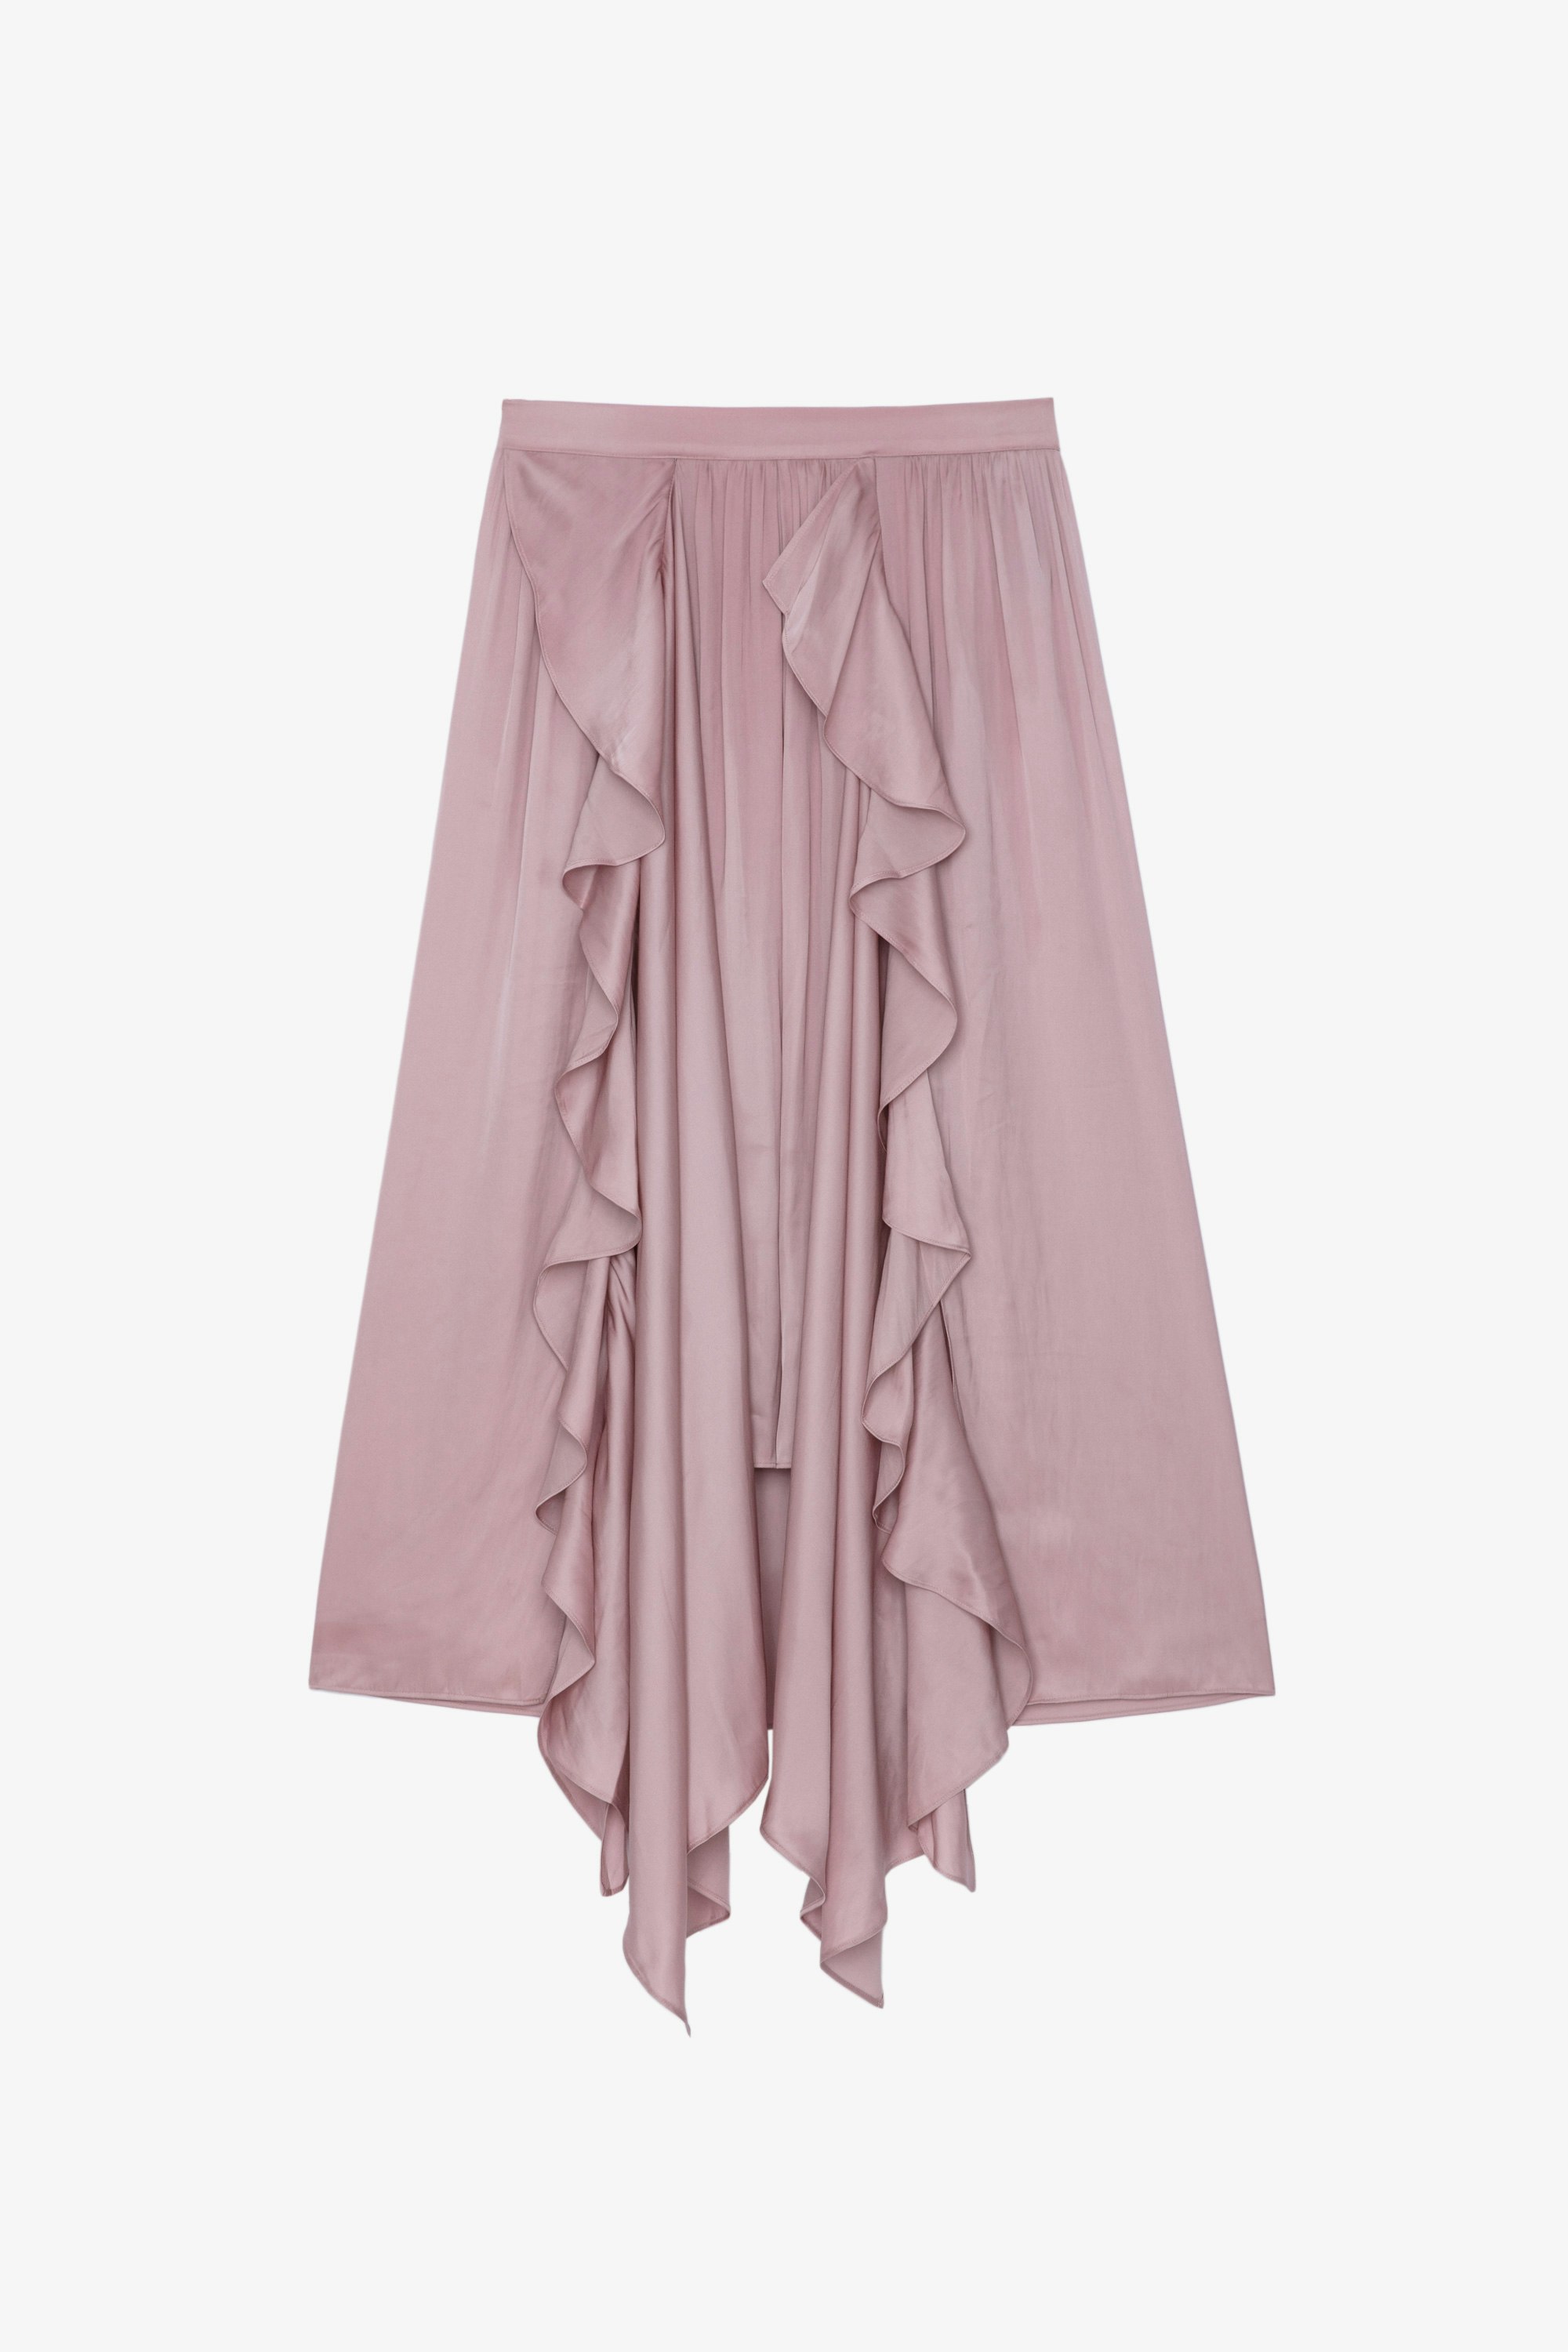 Jeb Satin Skirt Women’s long pink asymmetric skirt with ruffles